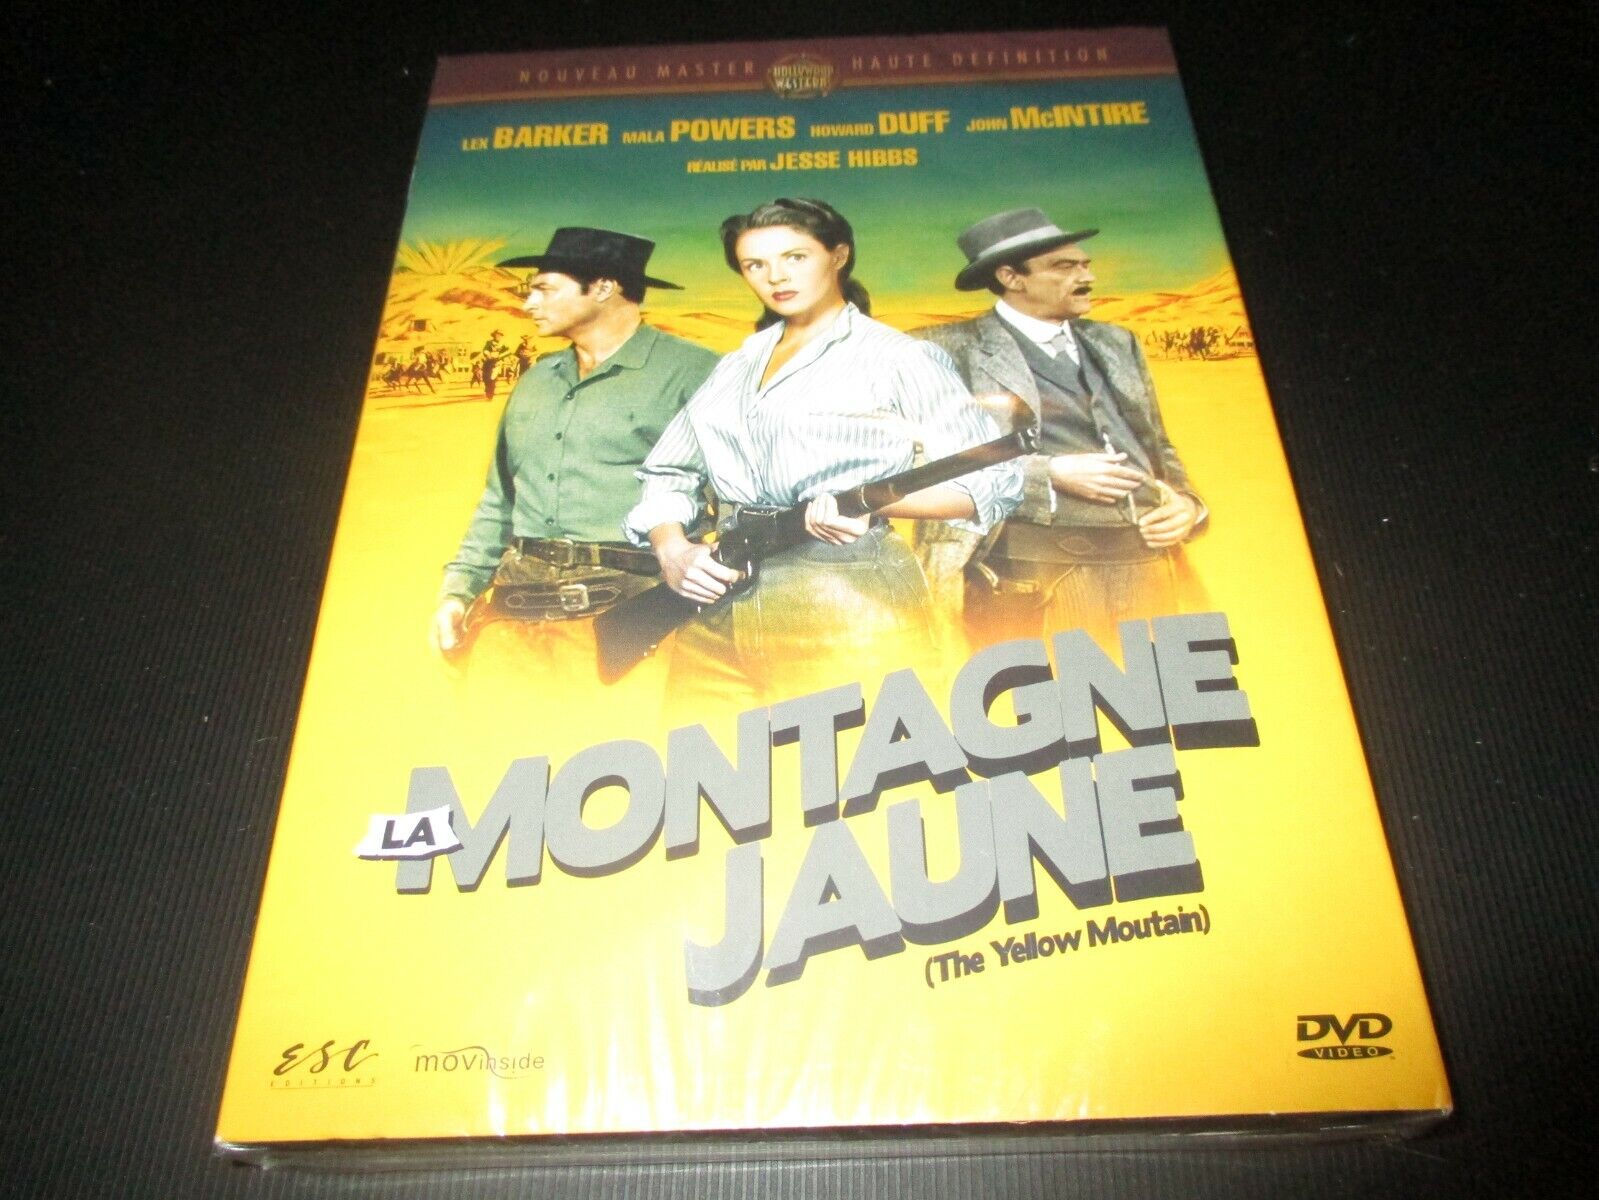 DVD NEUF "LA MONTAGNE JAUNE" Lex BARKER, Mala POWERS, Howard DUFF / Jesse HIBBS